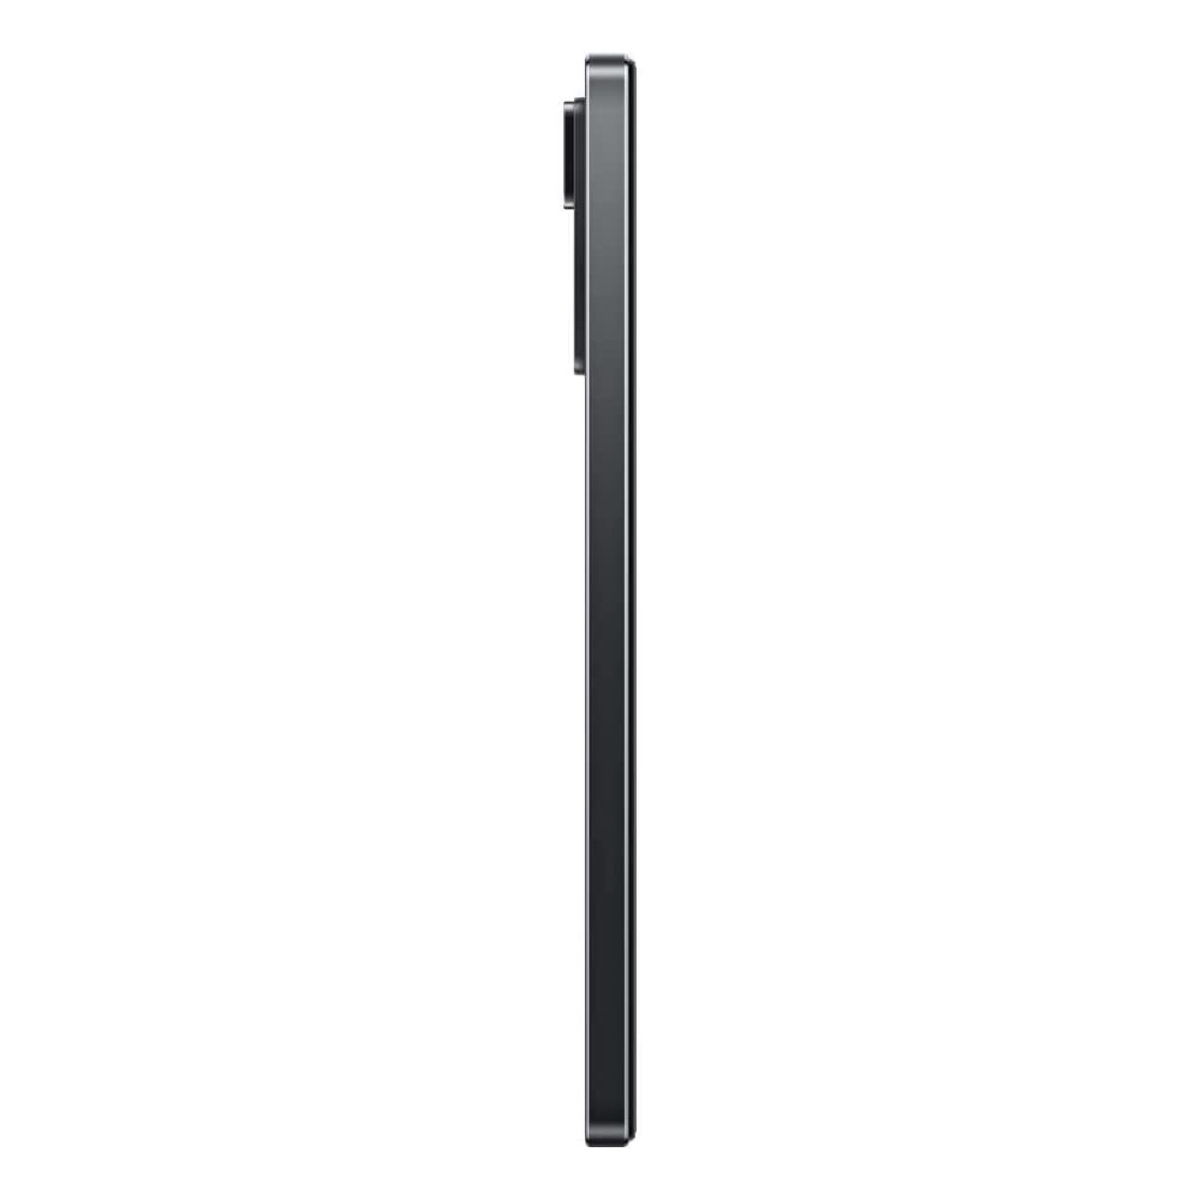 XIAOMI Note 11 Pro 4G Grey (Graffiti Gray), 8GB RAM, 128 GB Storage